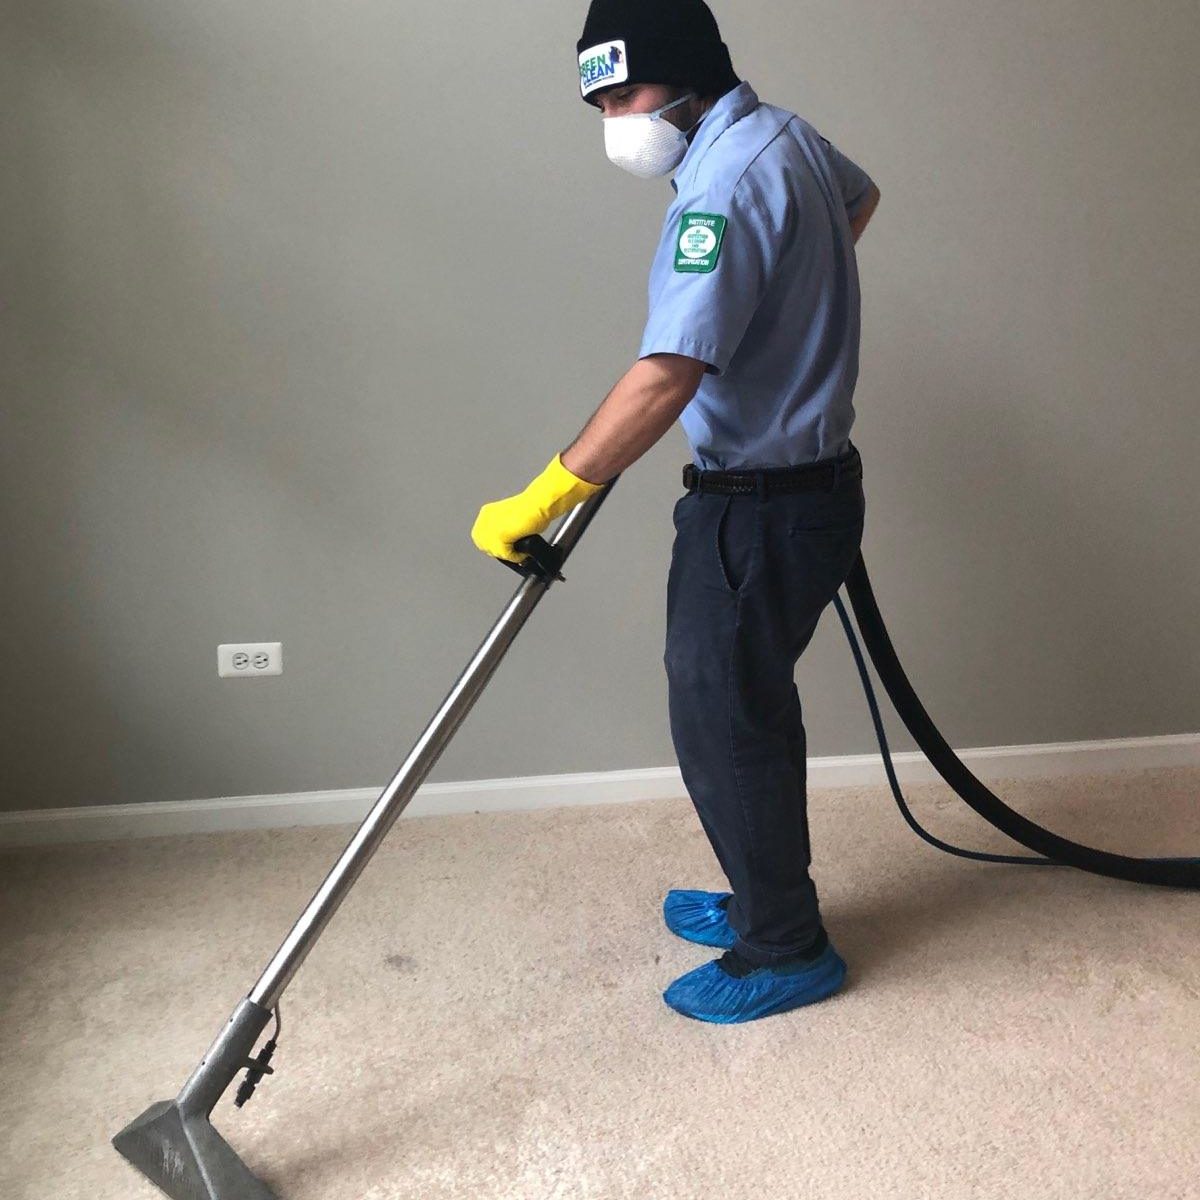 carpet cleaning services atlanta